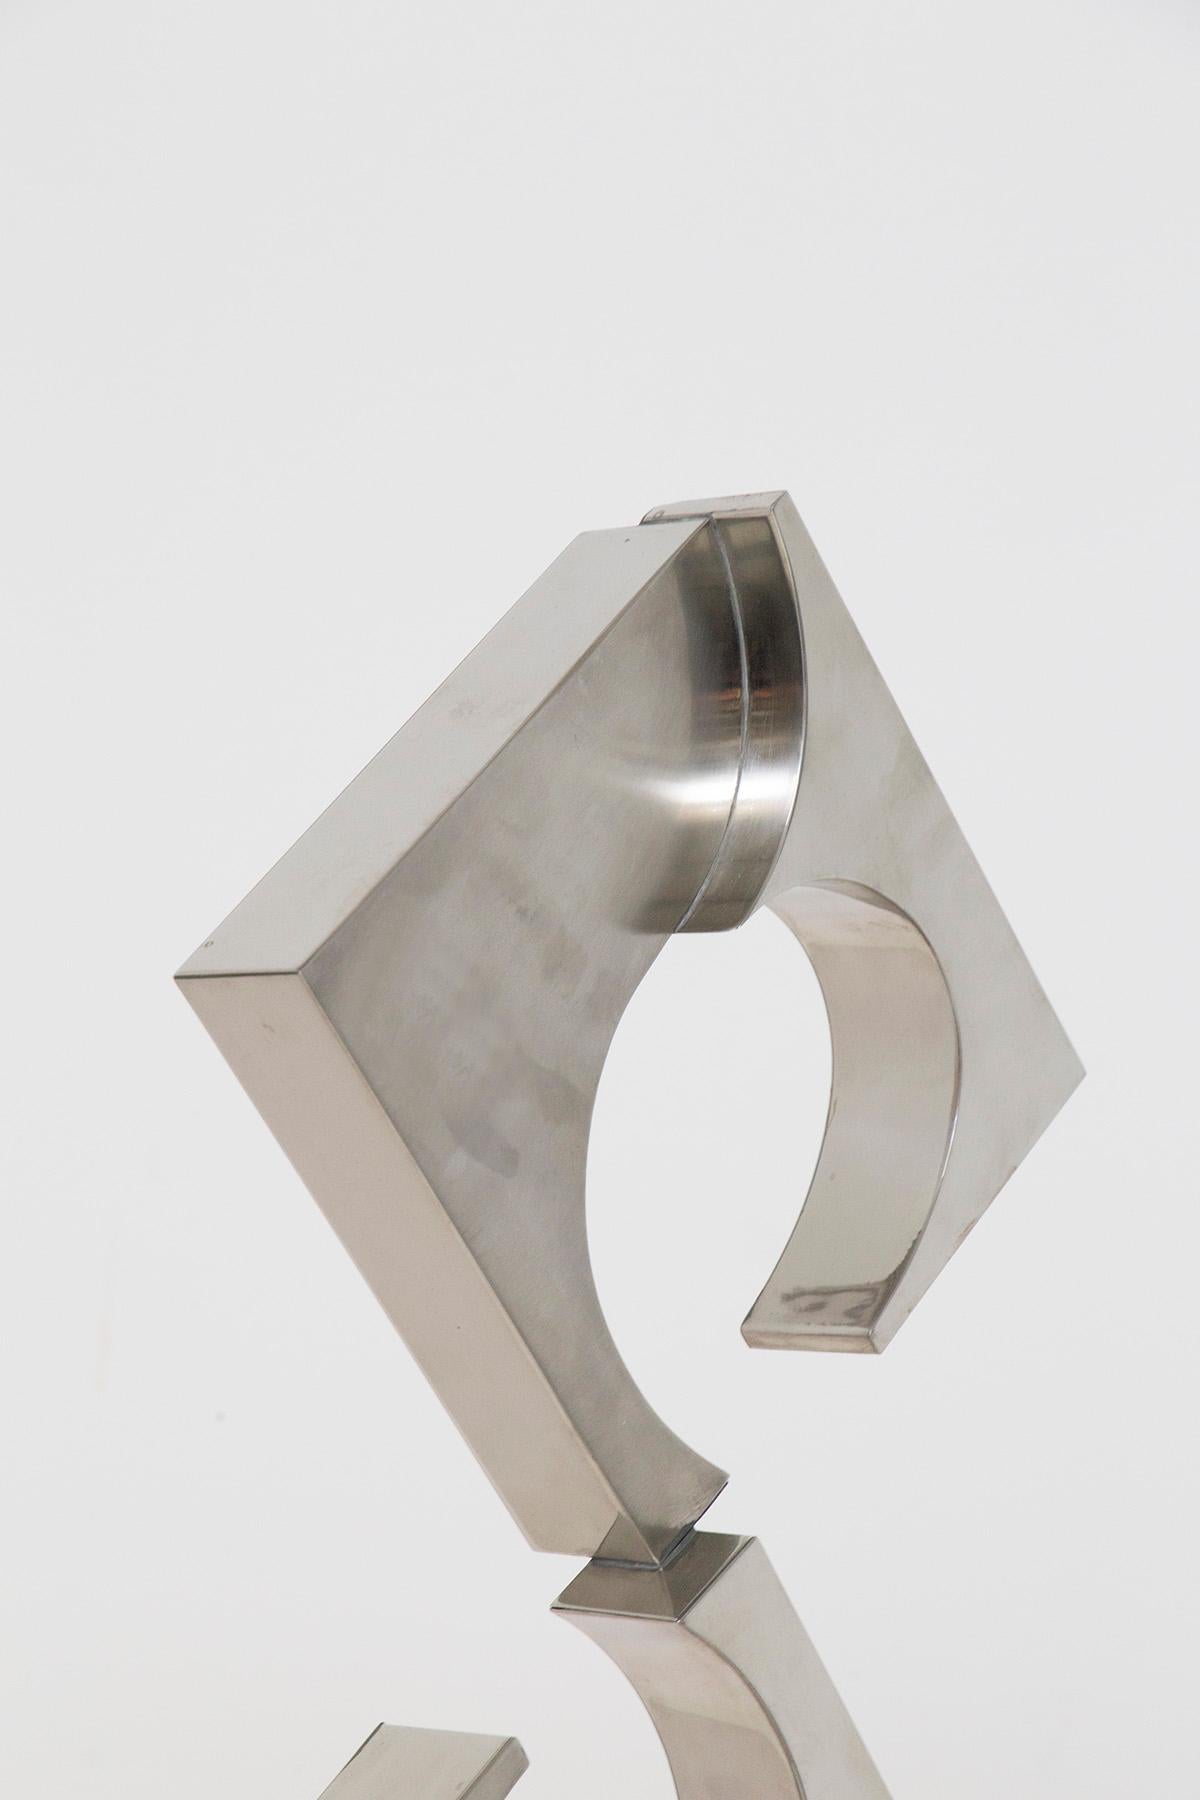 Carmelo Cappello Metal Sculpture, Triangular Spiral For Sale 1